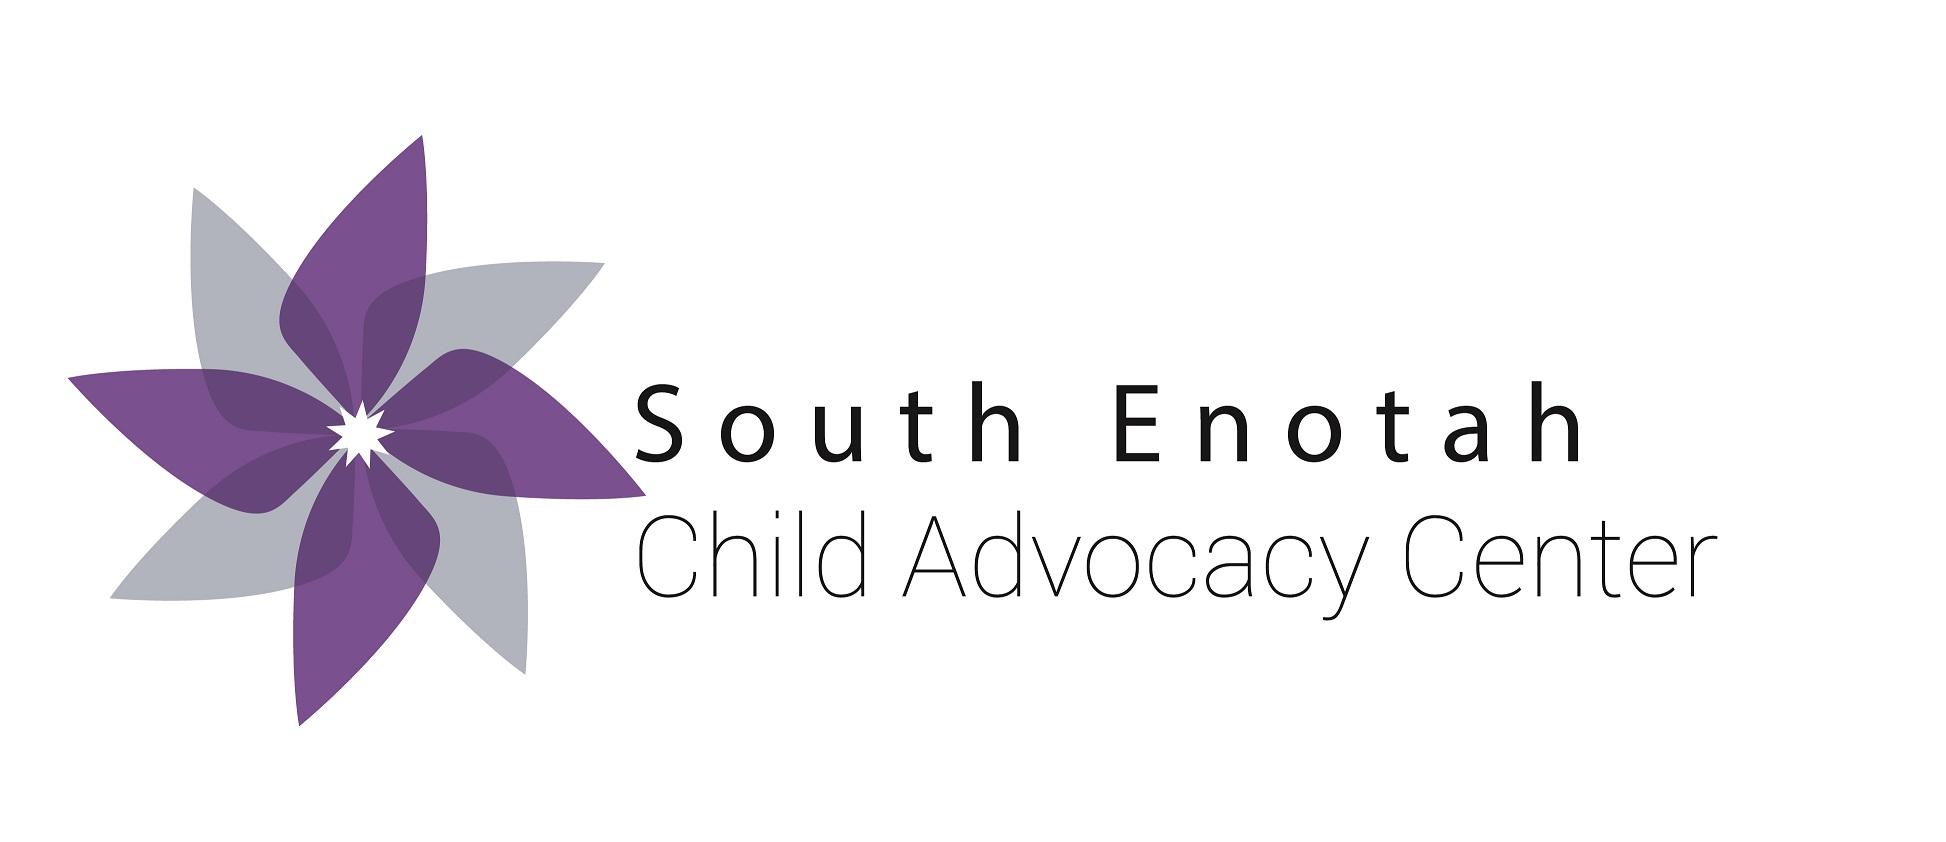 South Enotah Child Advocacy Center 3rd Annual Golf Tournament